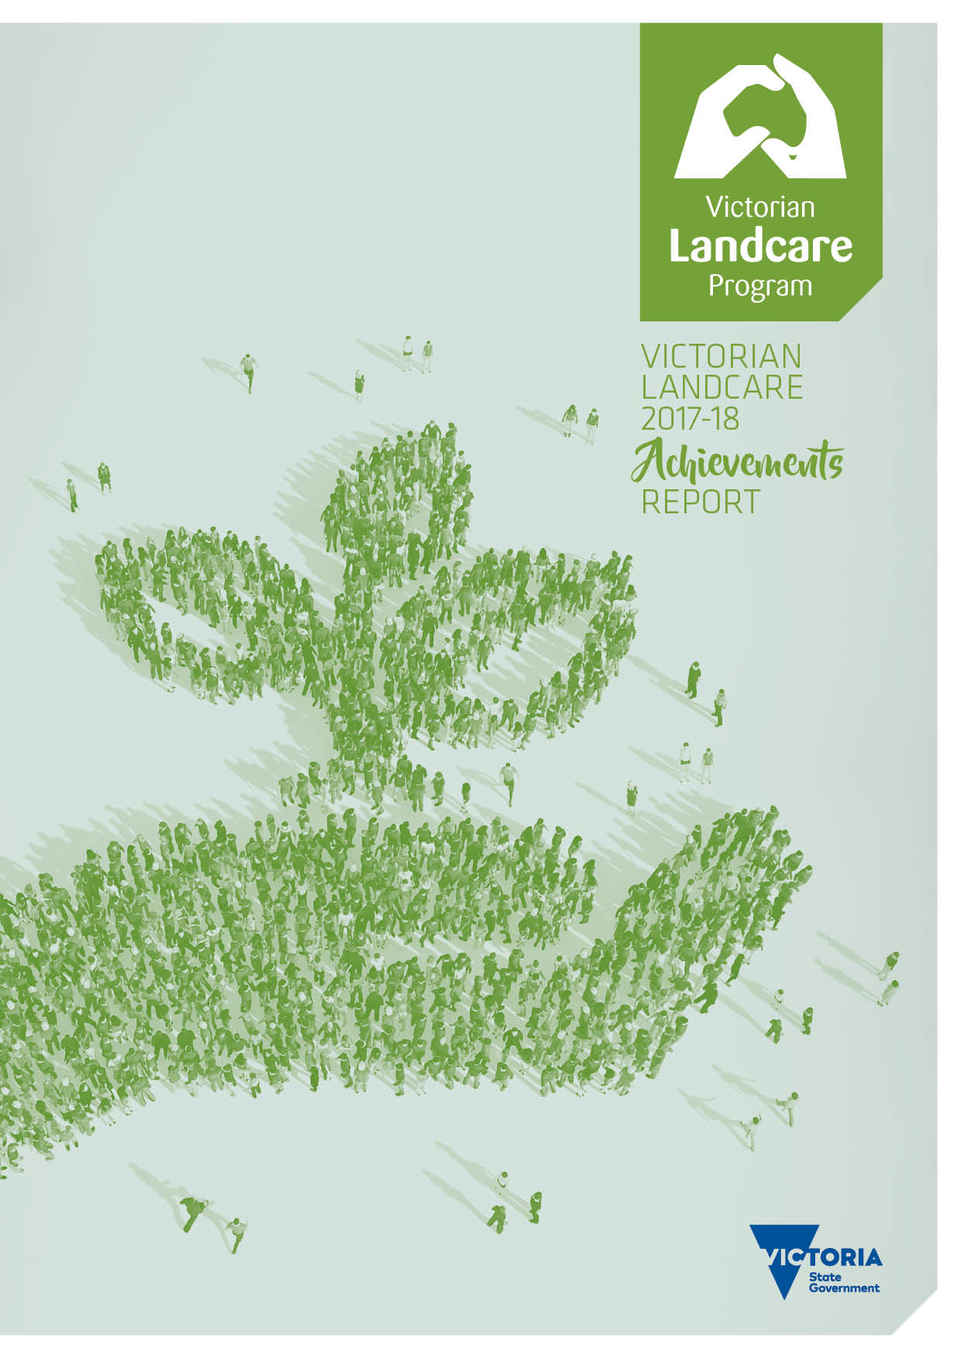 LDC2 Landcare Achievements Report Cover FA LR